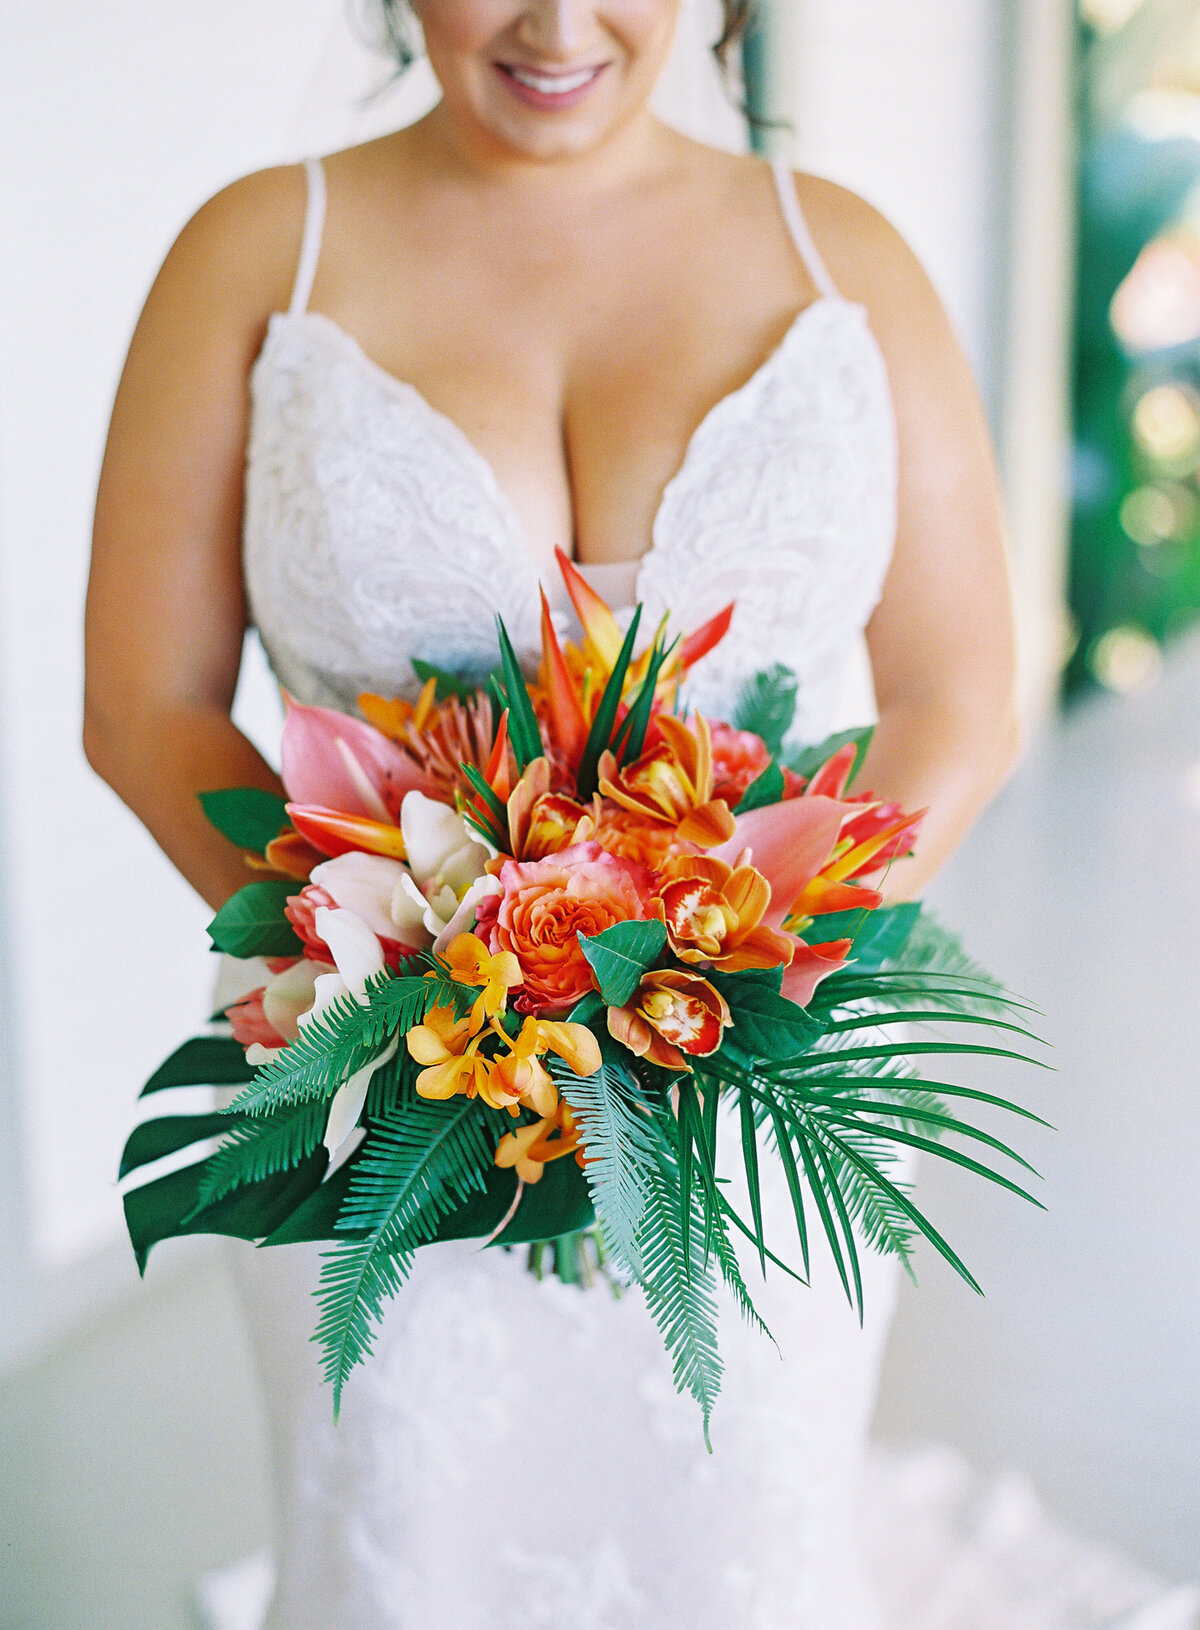 Maui Love Weddings and Events Maui Hawaii Full Service Wedding Planning Coordinating Event Design Company Destination Wedding 19